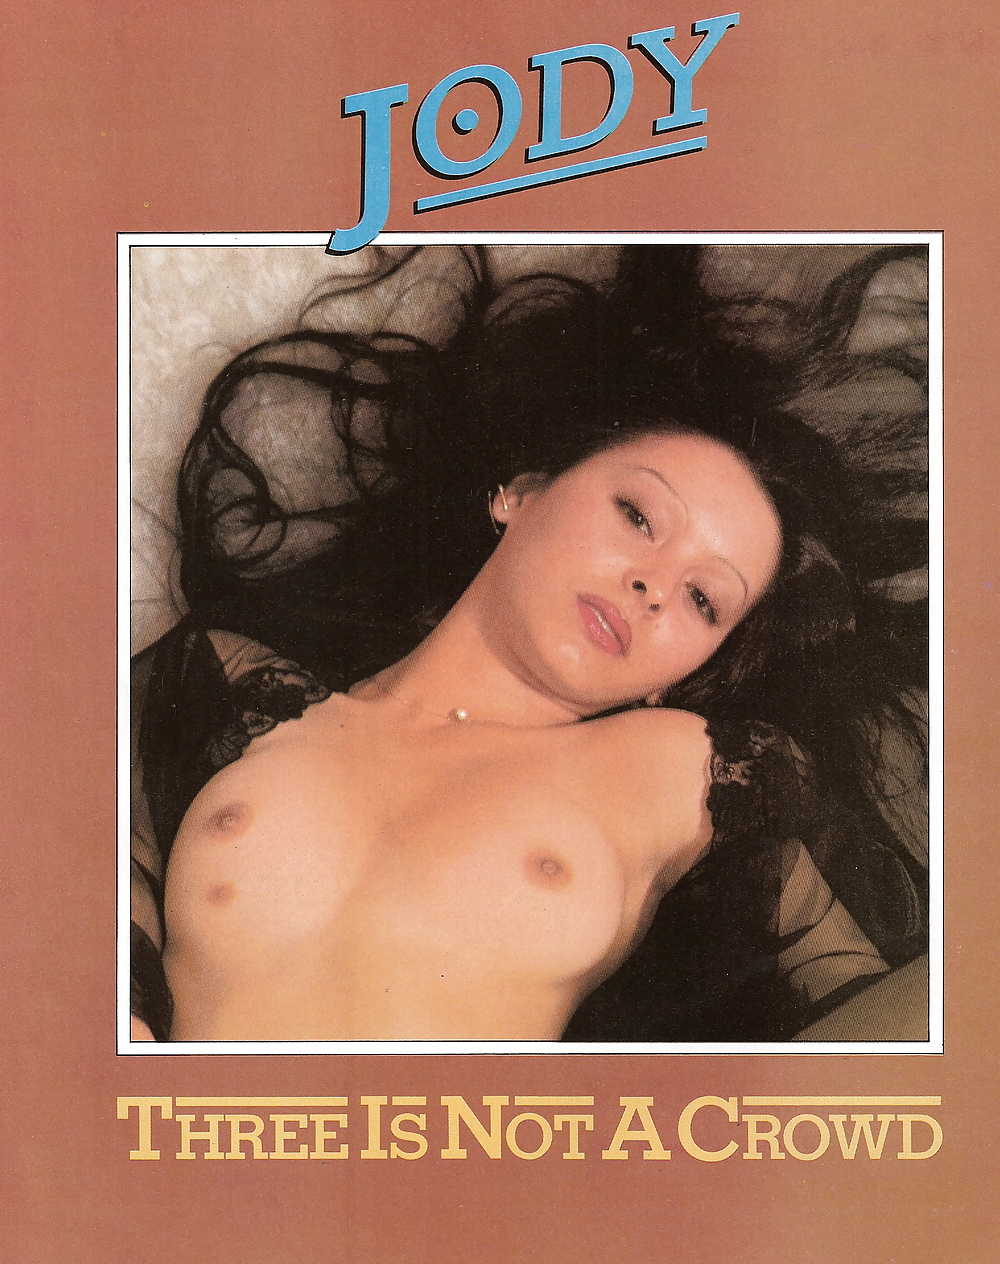 ¡Hustler mayo 1977 - jody - 3 nippled lady!
 #24748570